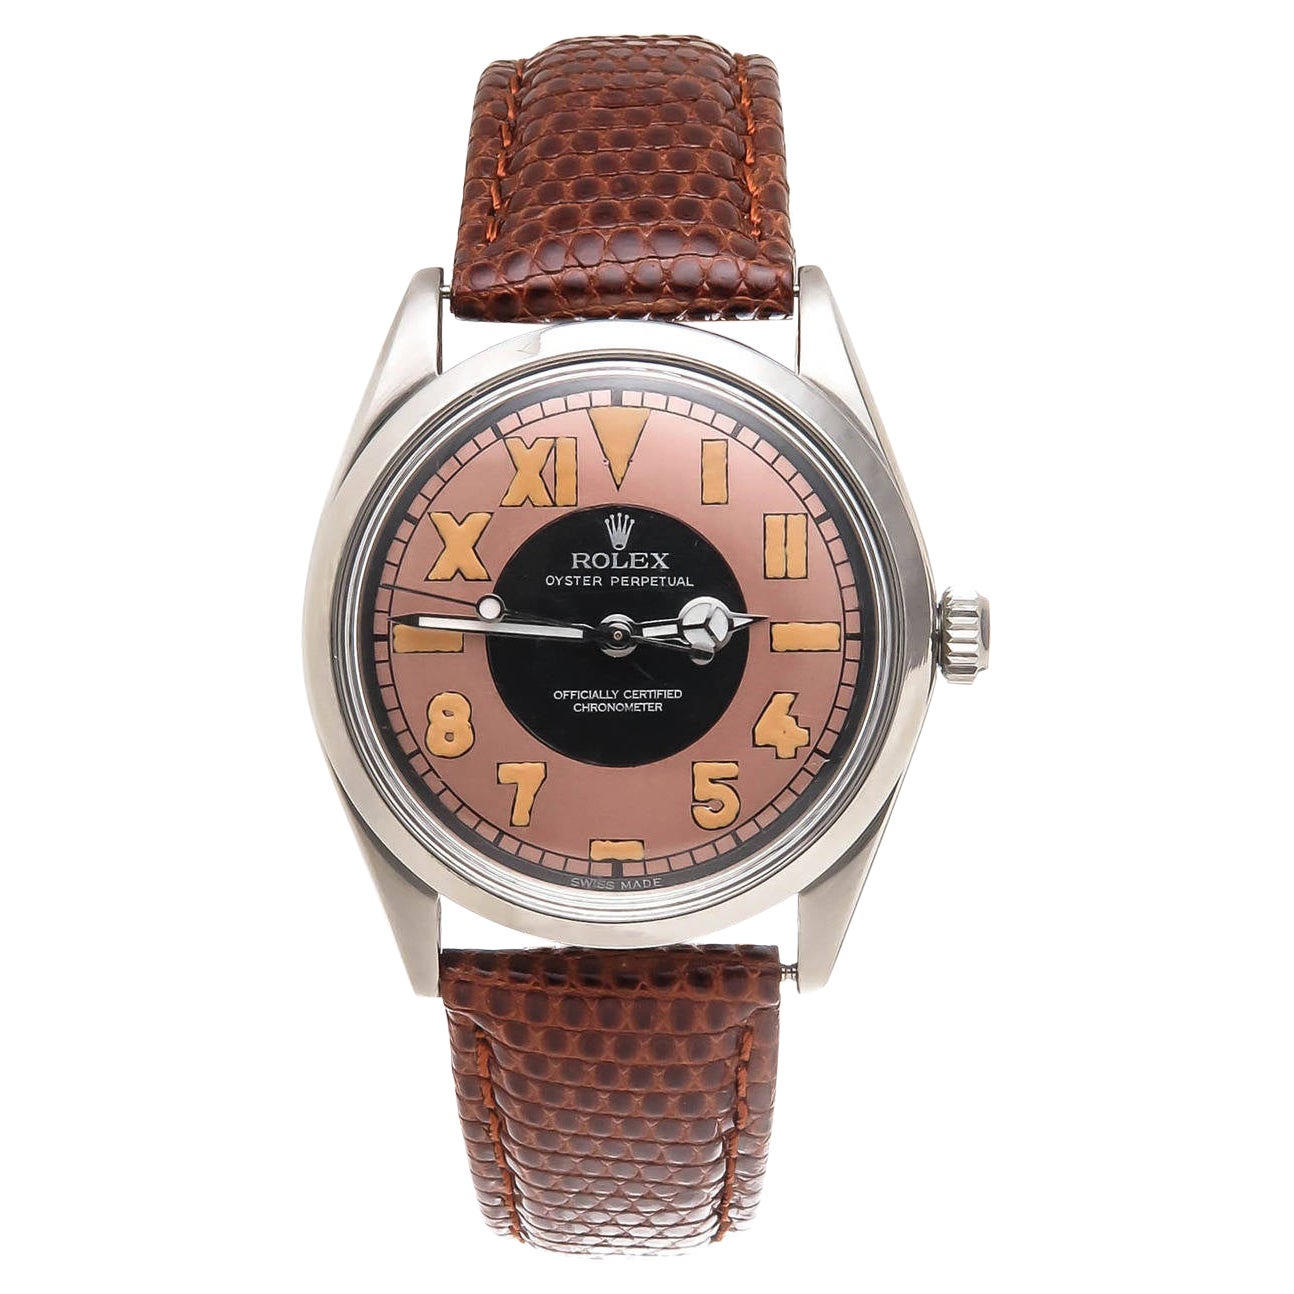 Rolex Edelstahl Oyster Perpetual Chronometer Armbanduhr Ref 5552